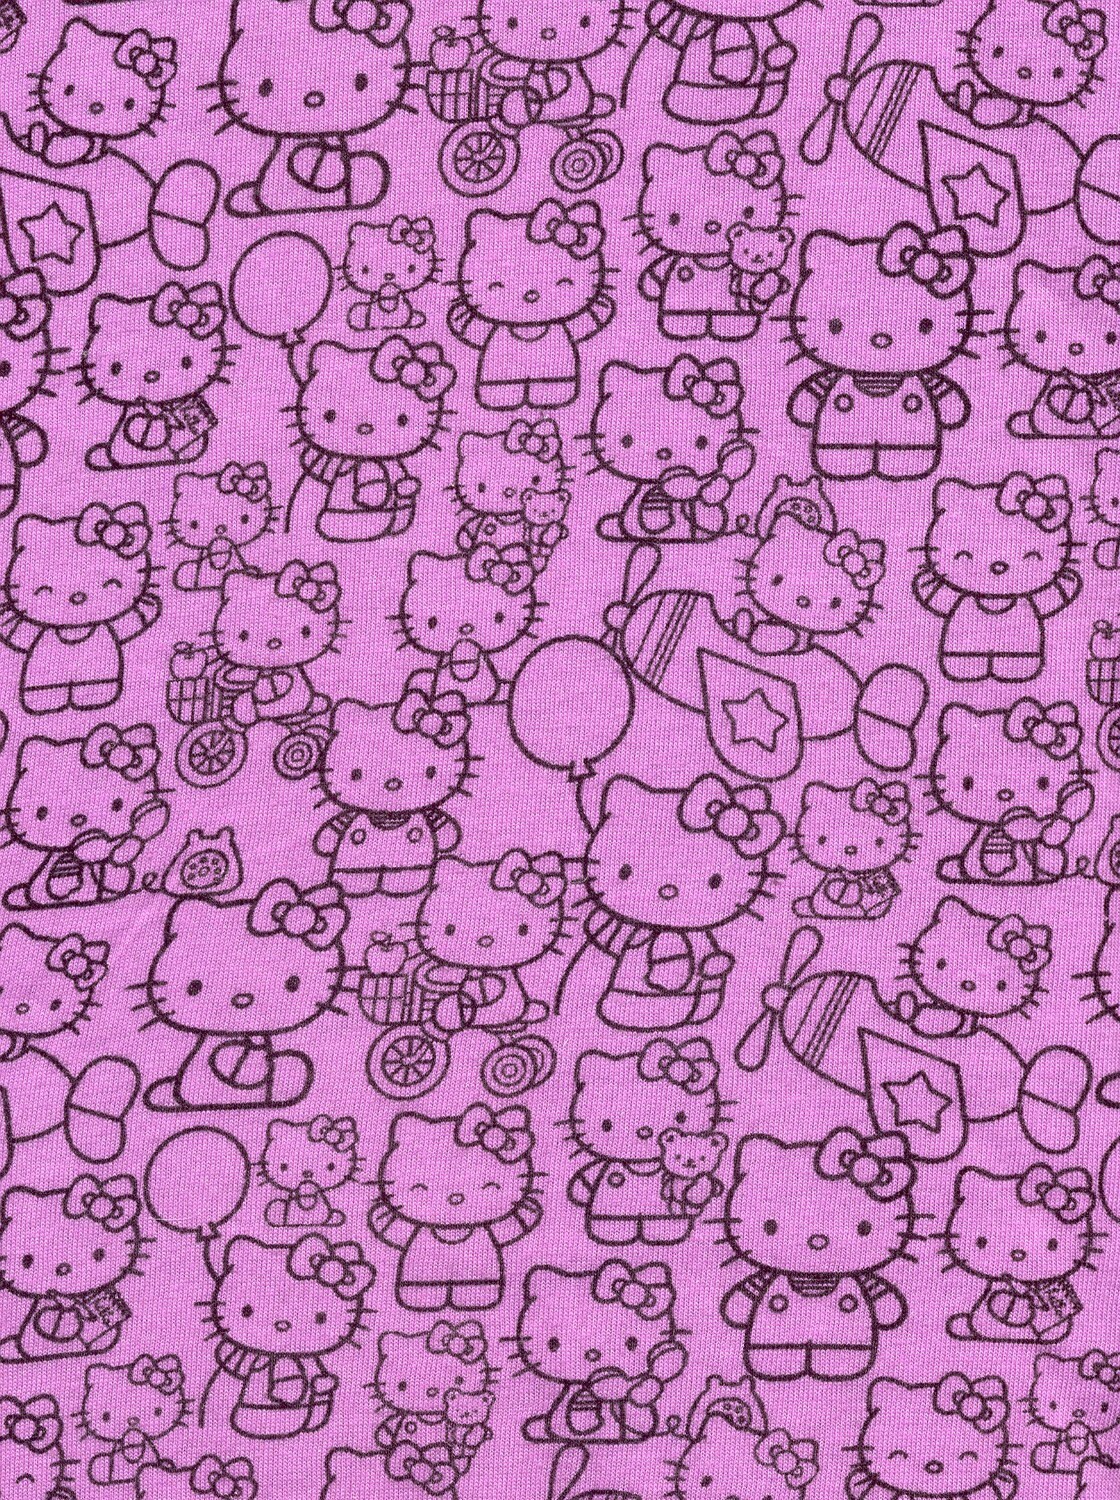 Hello Kitty Purple and Black Cotton knit fabric 1 yard